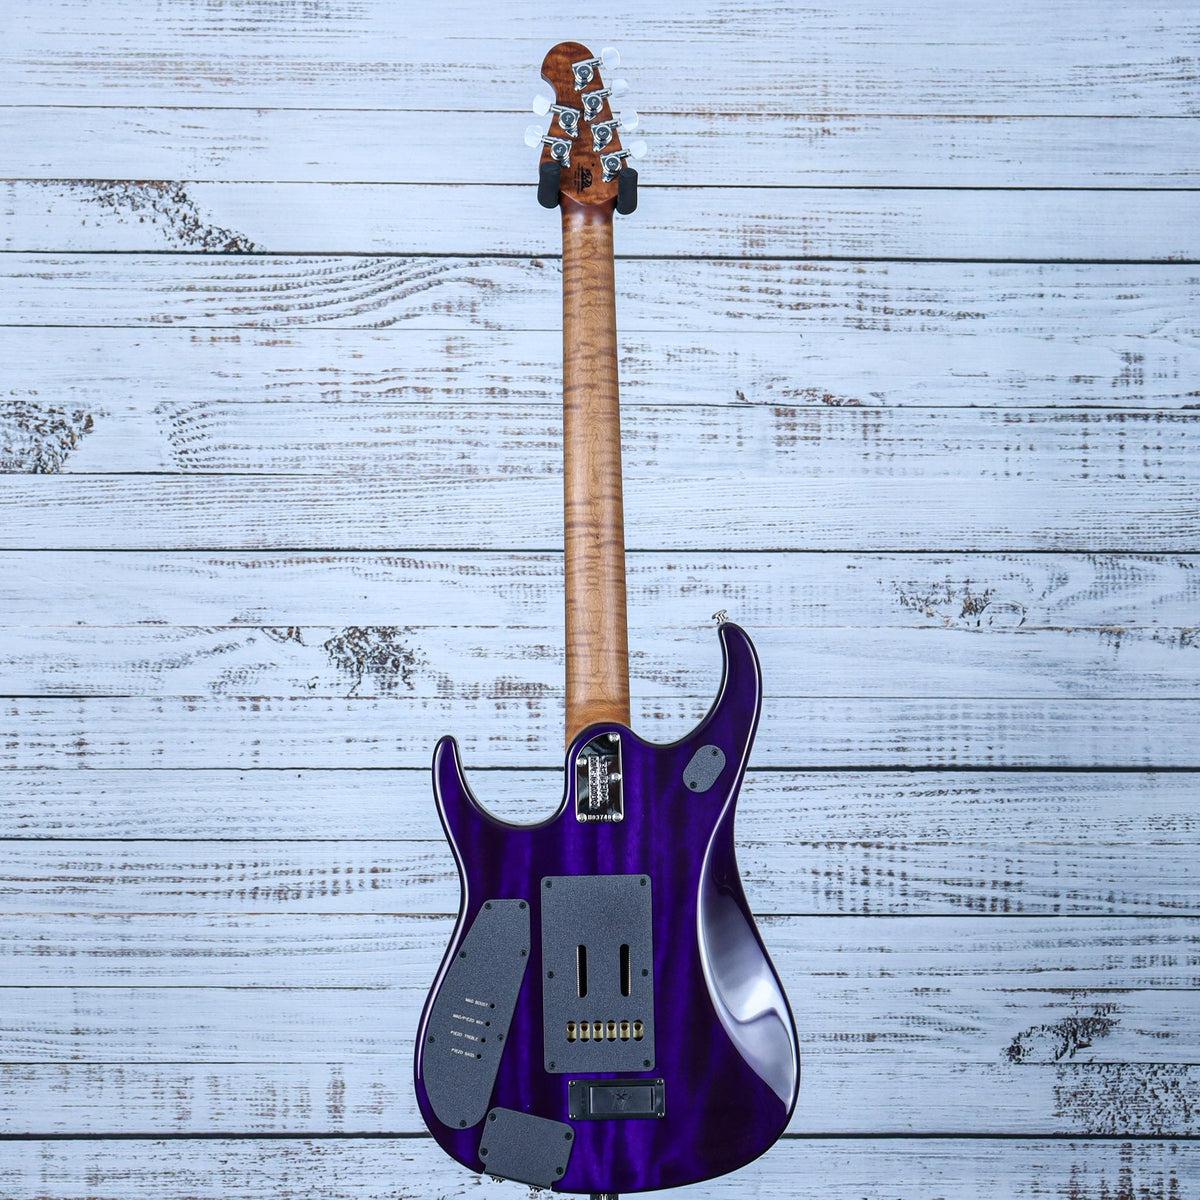 Ernie Ball Music Man JP15 Electric Guitar | Purple Nebula Flame Top